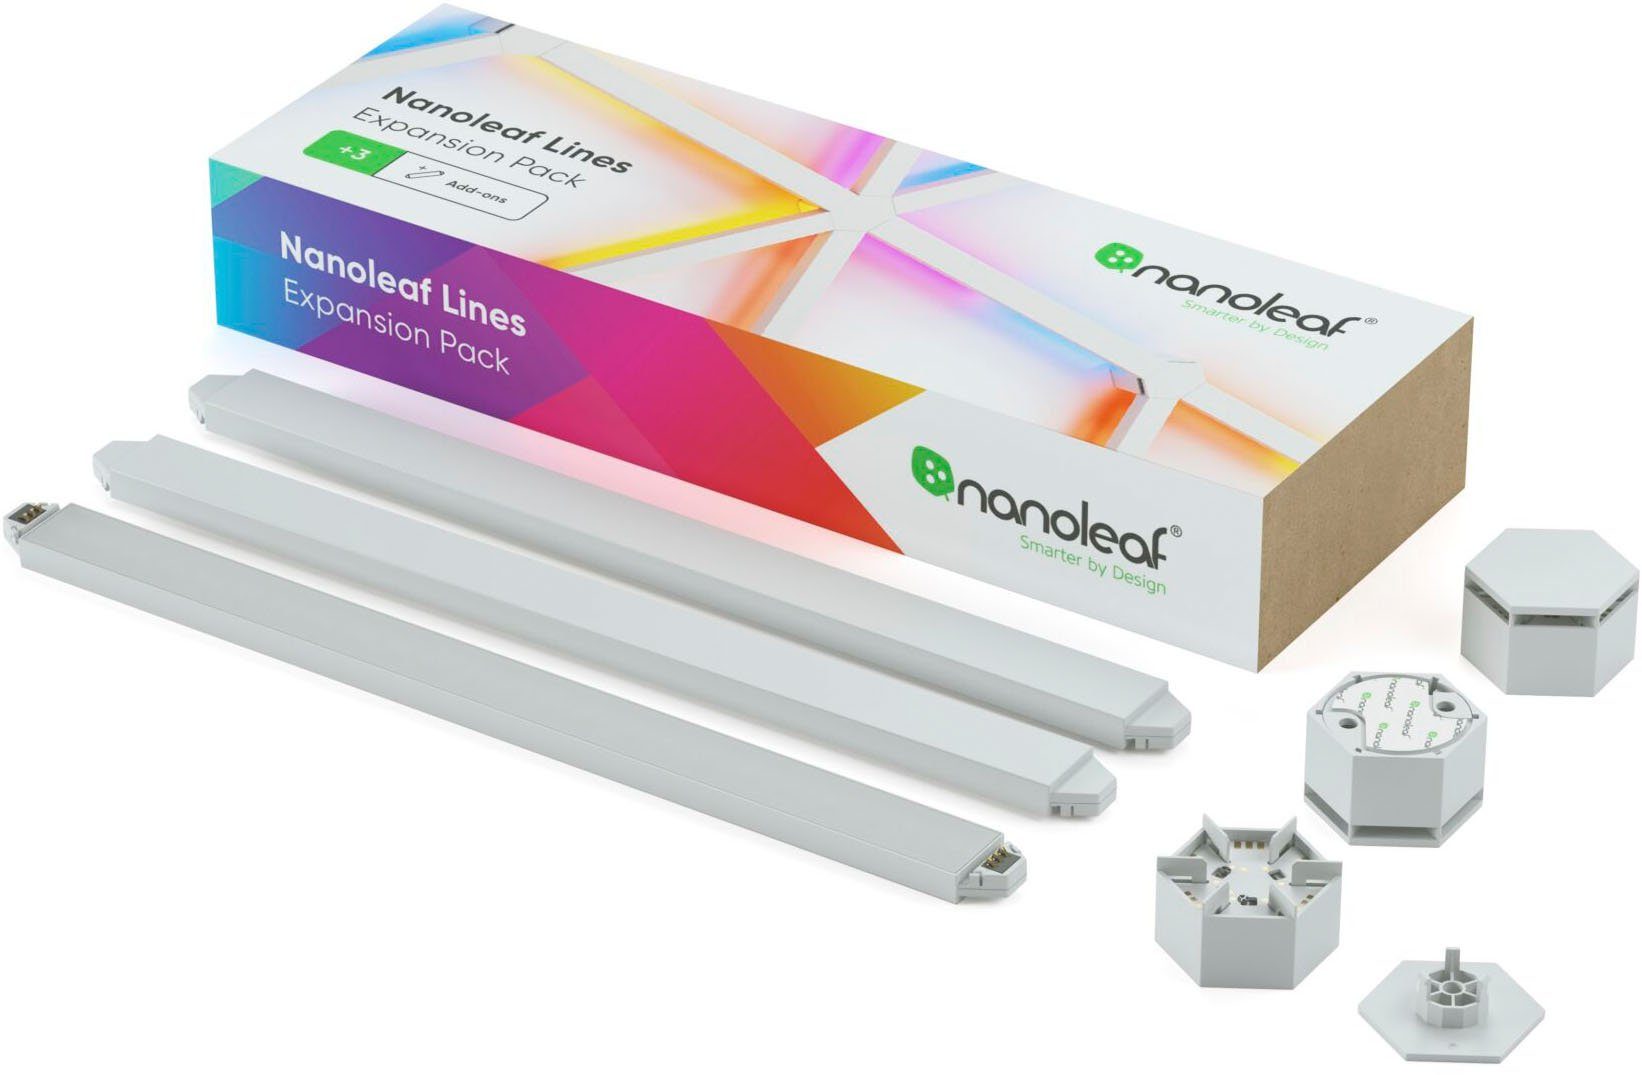 Lichtleiste elegante Smarte Farbwechsler, Dimmfunktion, LED LED Technologie fest Lines, Beleuchtung integriert, und nanoleaf